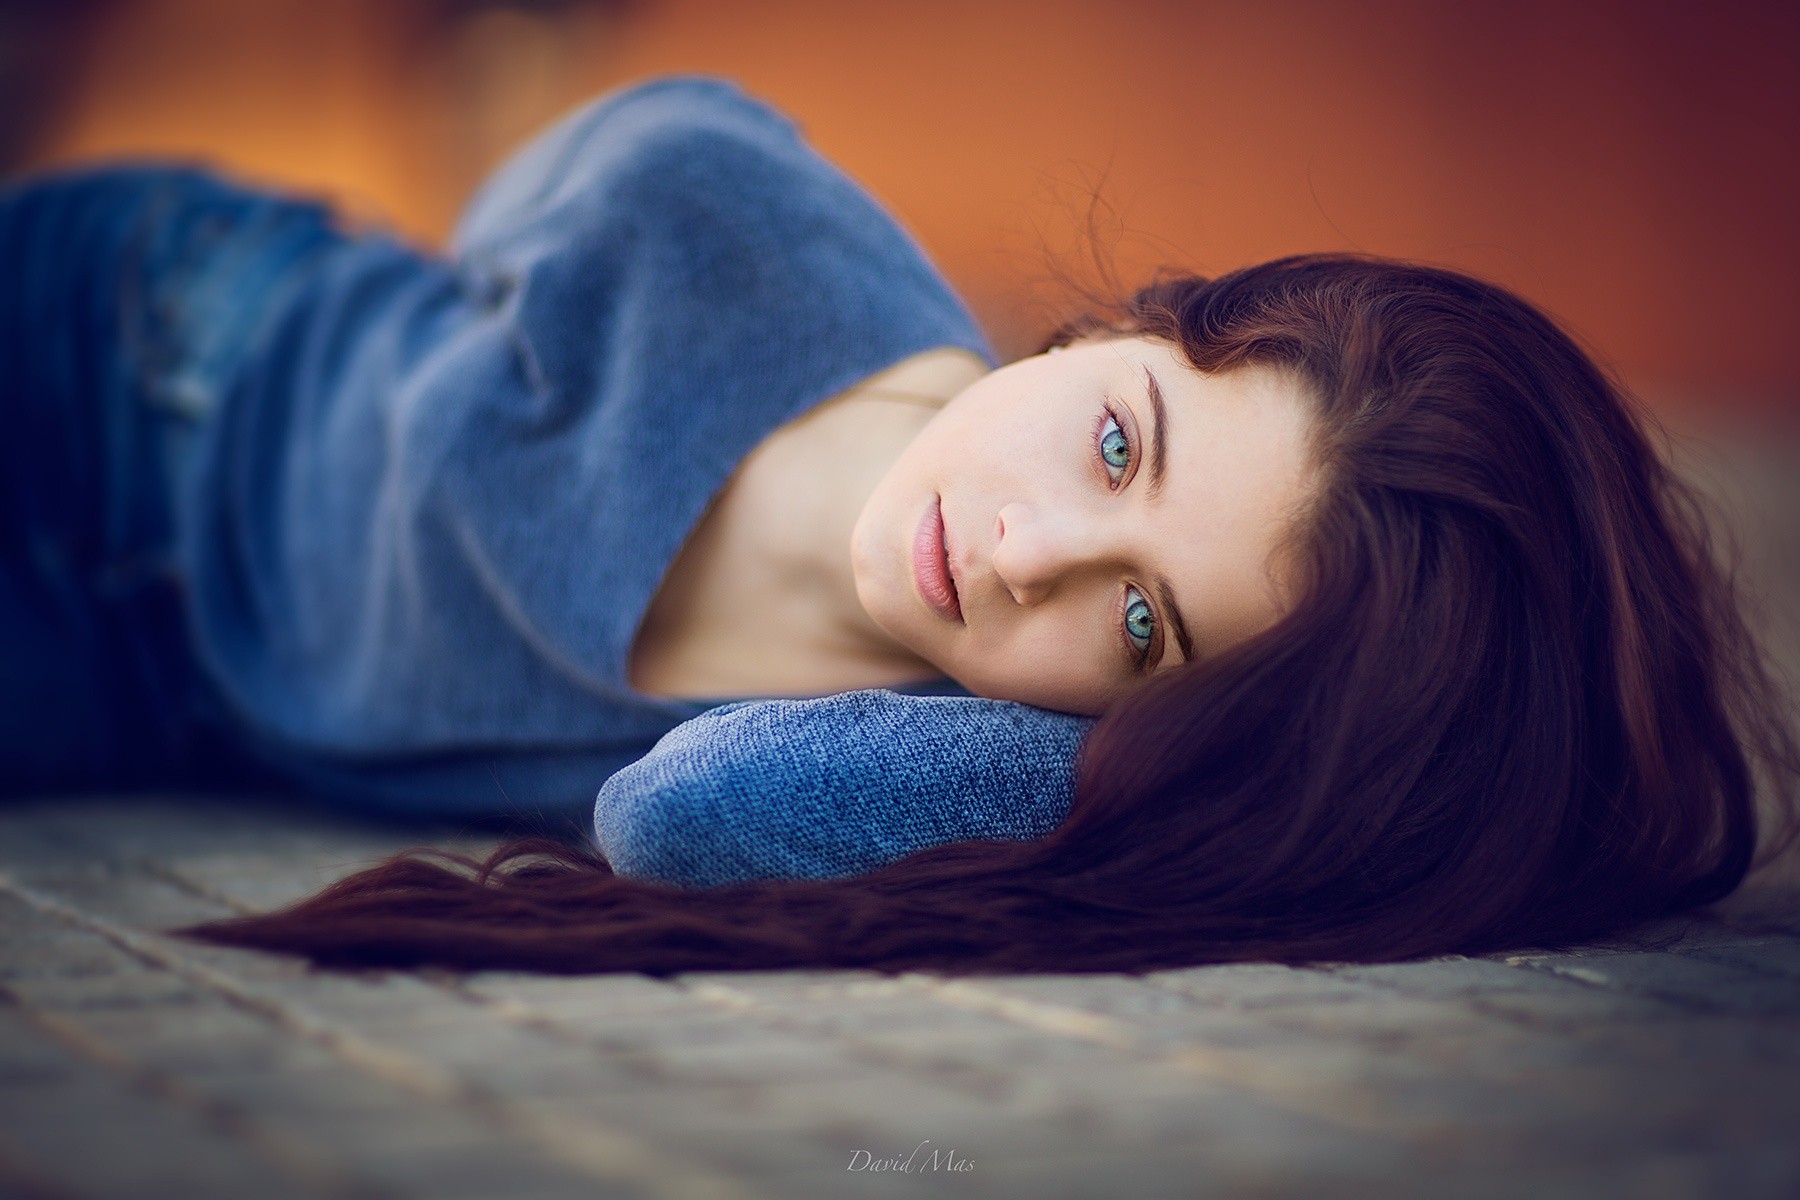 Eyes Women Brunette Blue Eyes Long Hair Lying Down Blue Sweater On The Floor David Mas 1800x1200